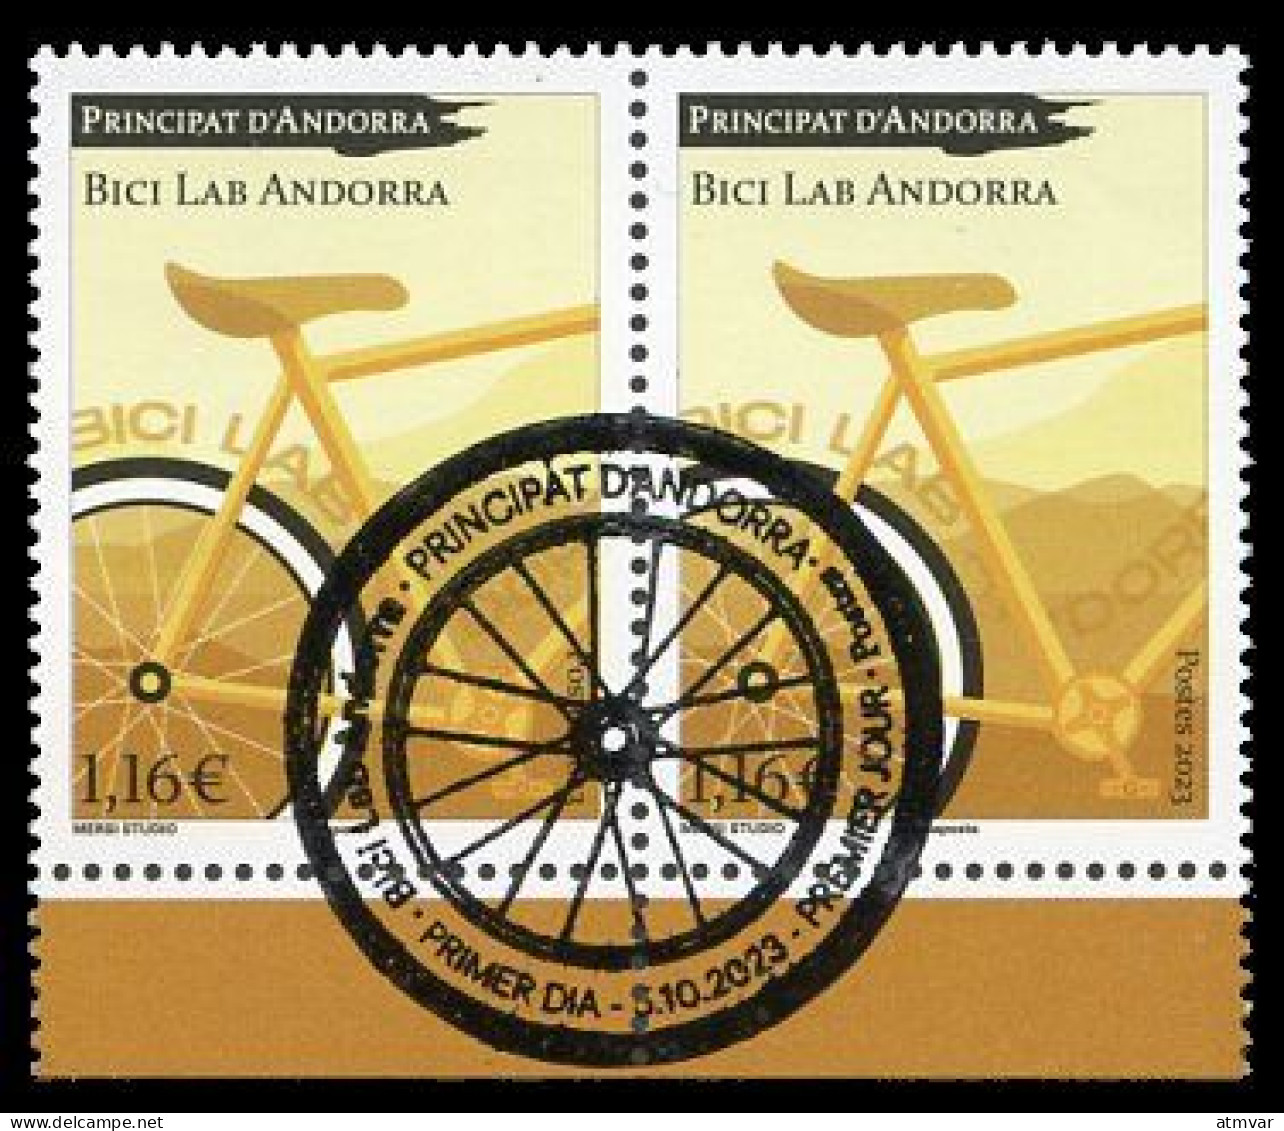 ANDORRA Postes (2023) Bici Lab Andorra, Bicicleta, Bicyclette, Bicycle, Fahrrad, Fiets - First Day - Oblitérés